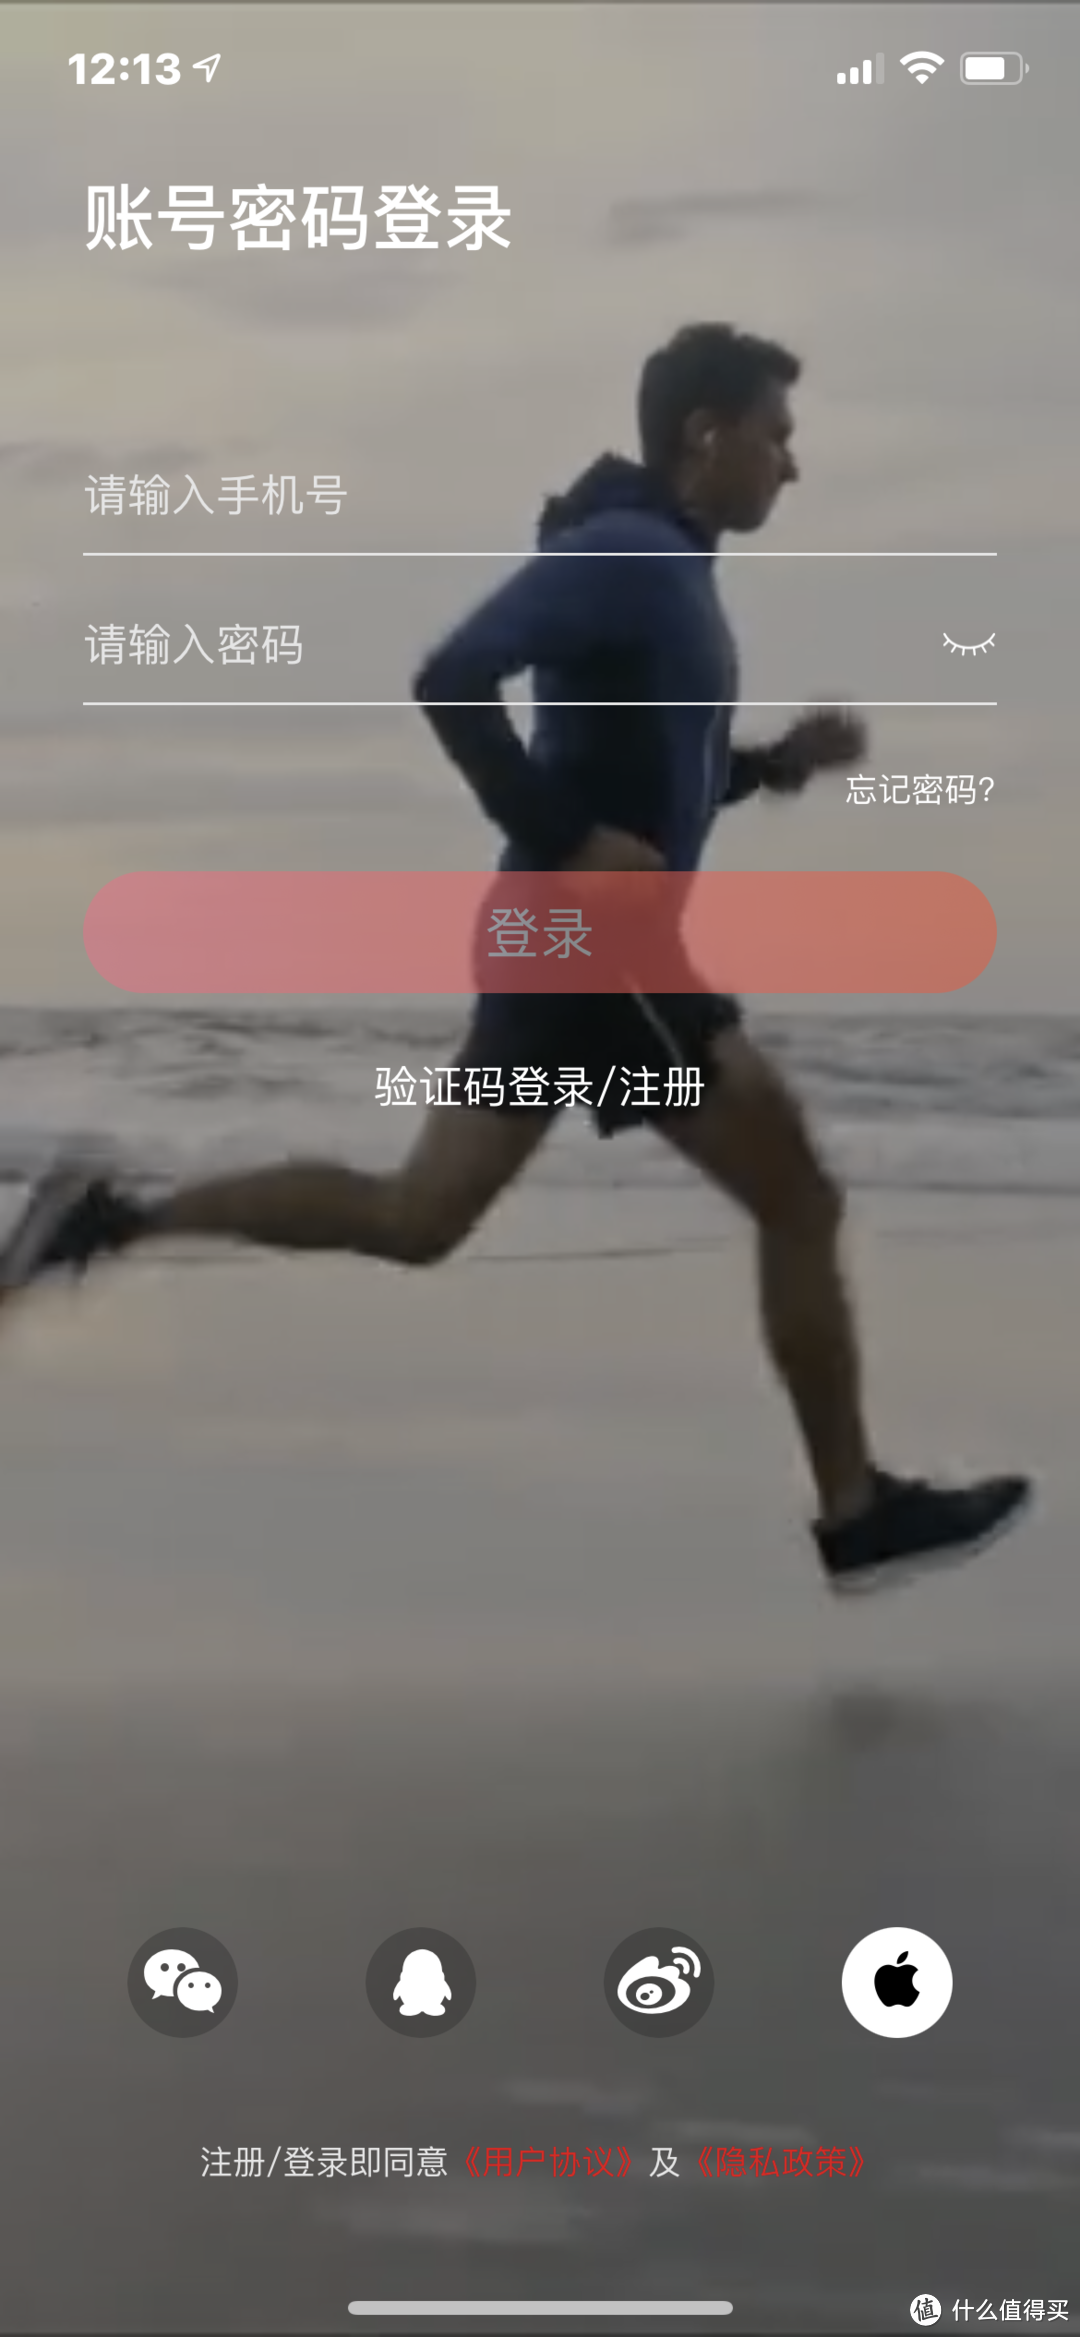 s7体脂秤拯救计划——派健康app